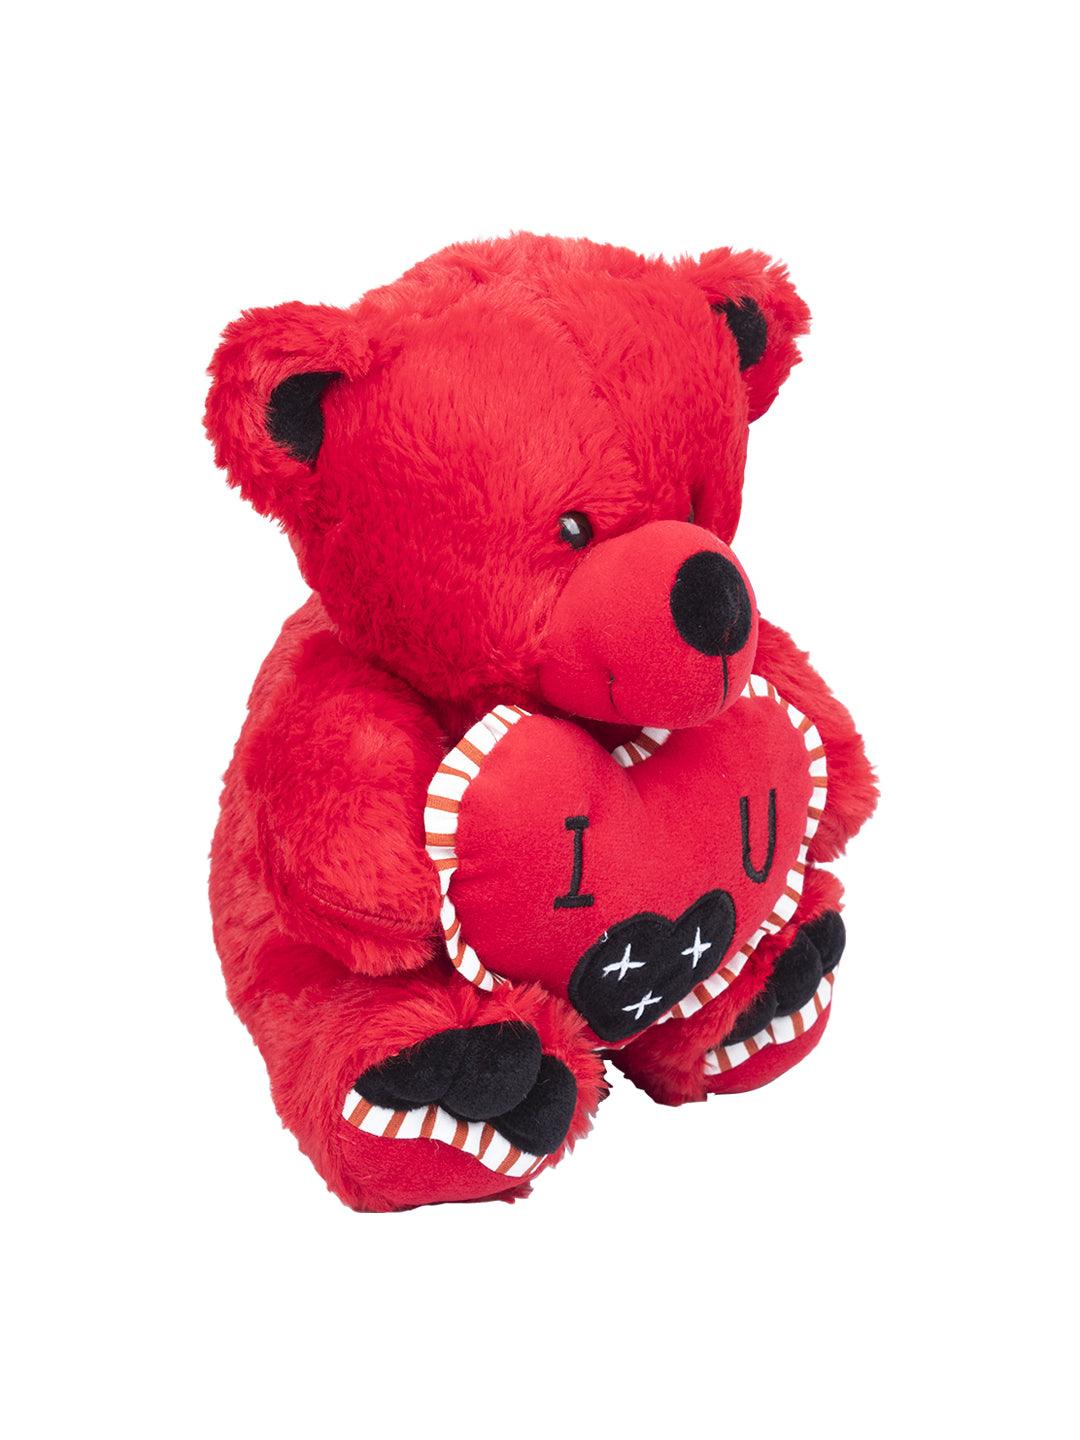 Valentine Red Heart Teddy Bear (25Cm) - MARKET 99